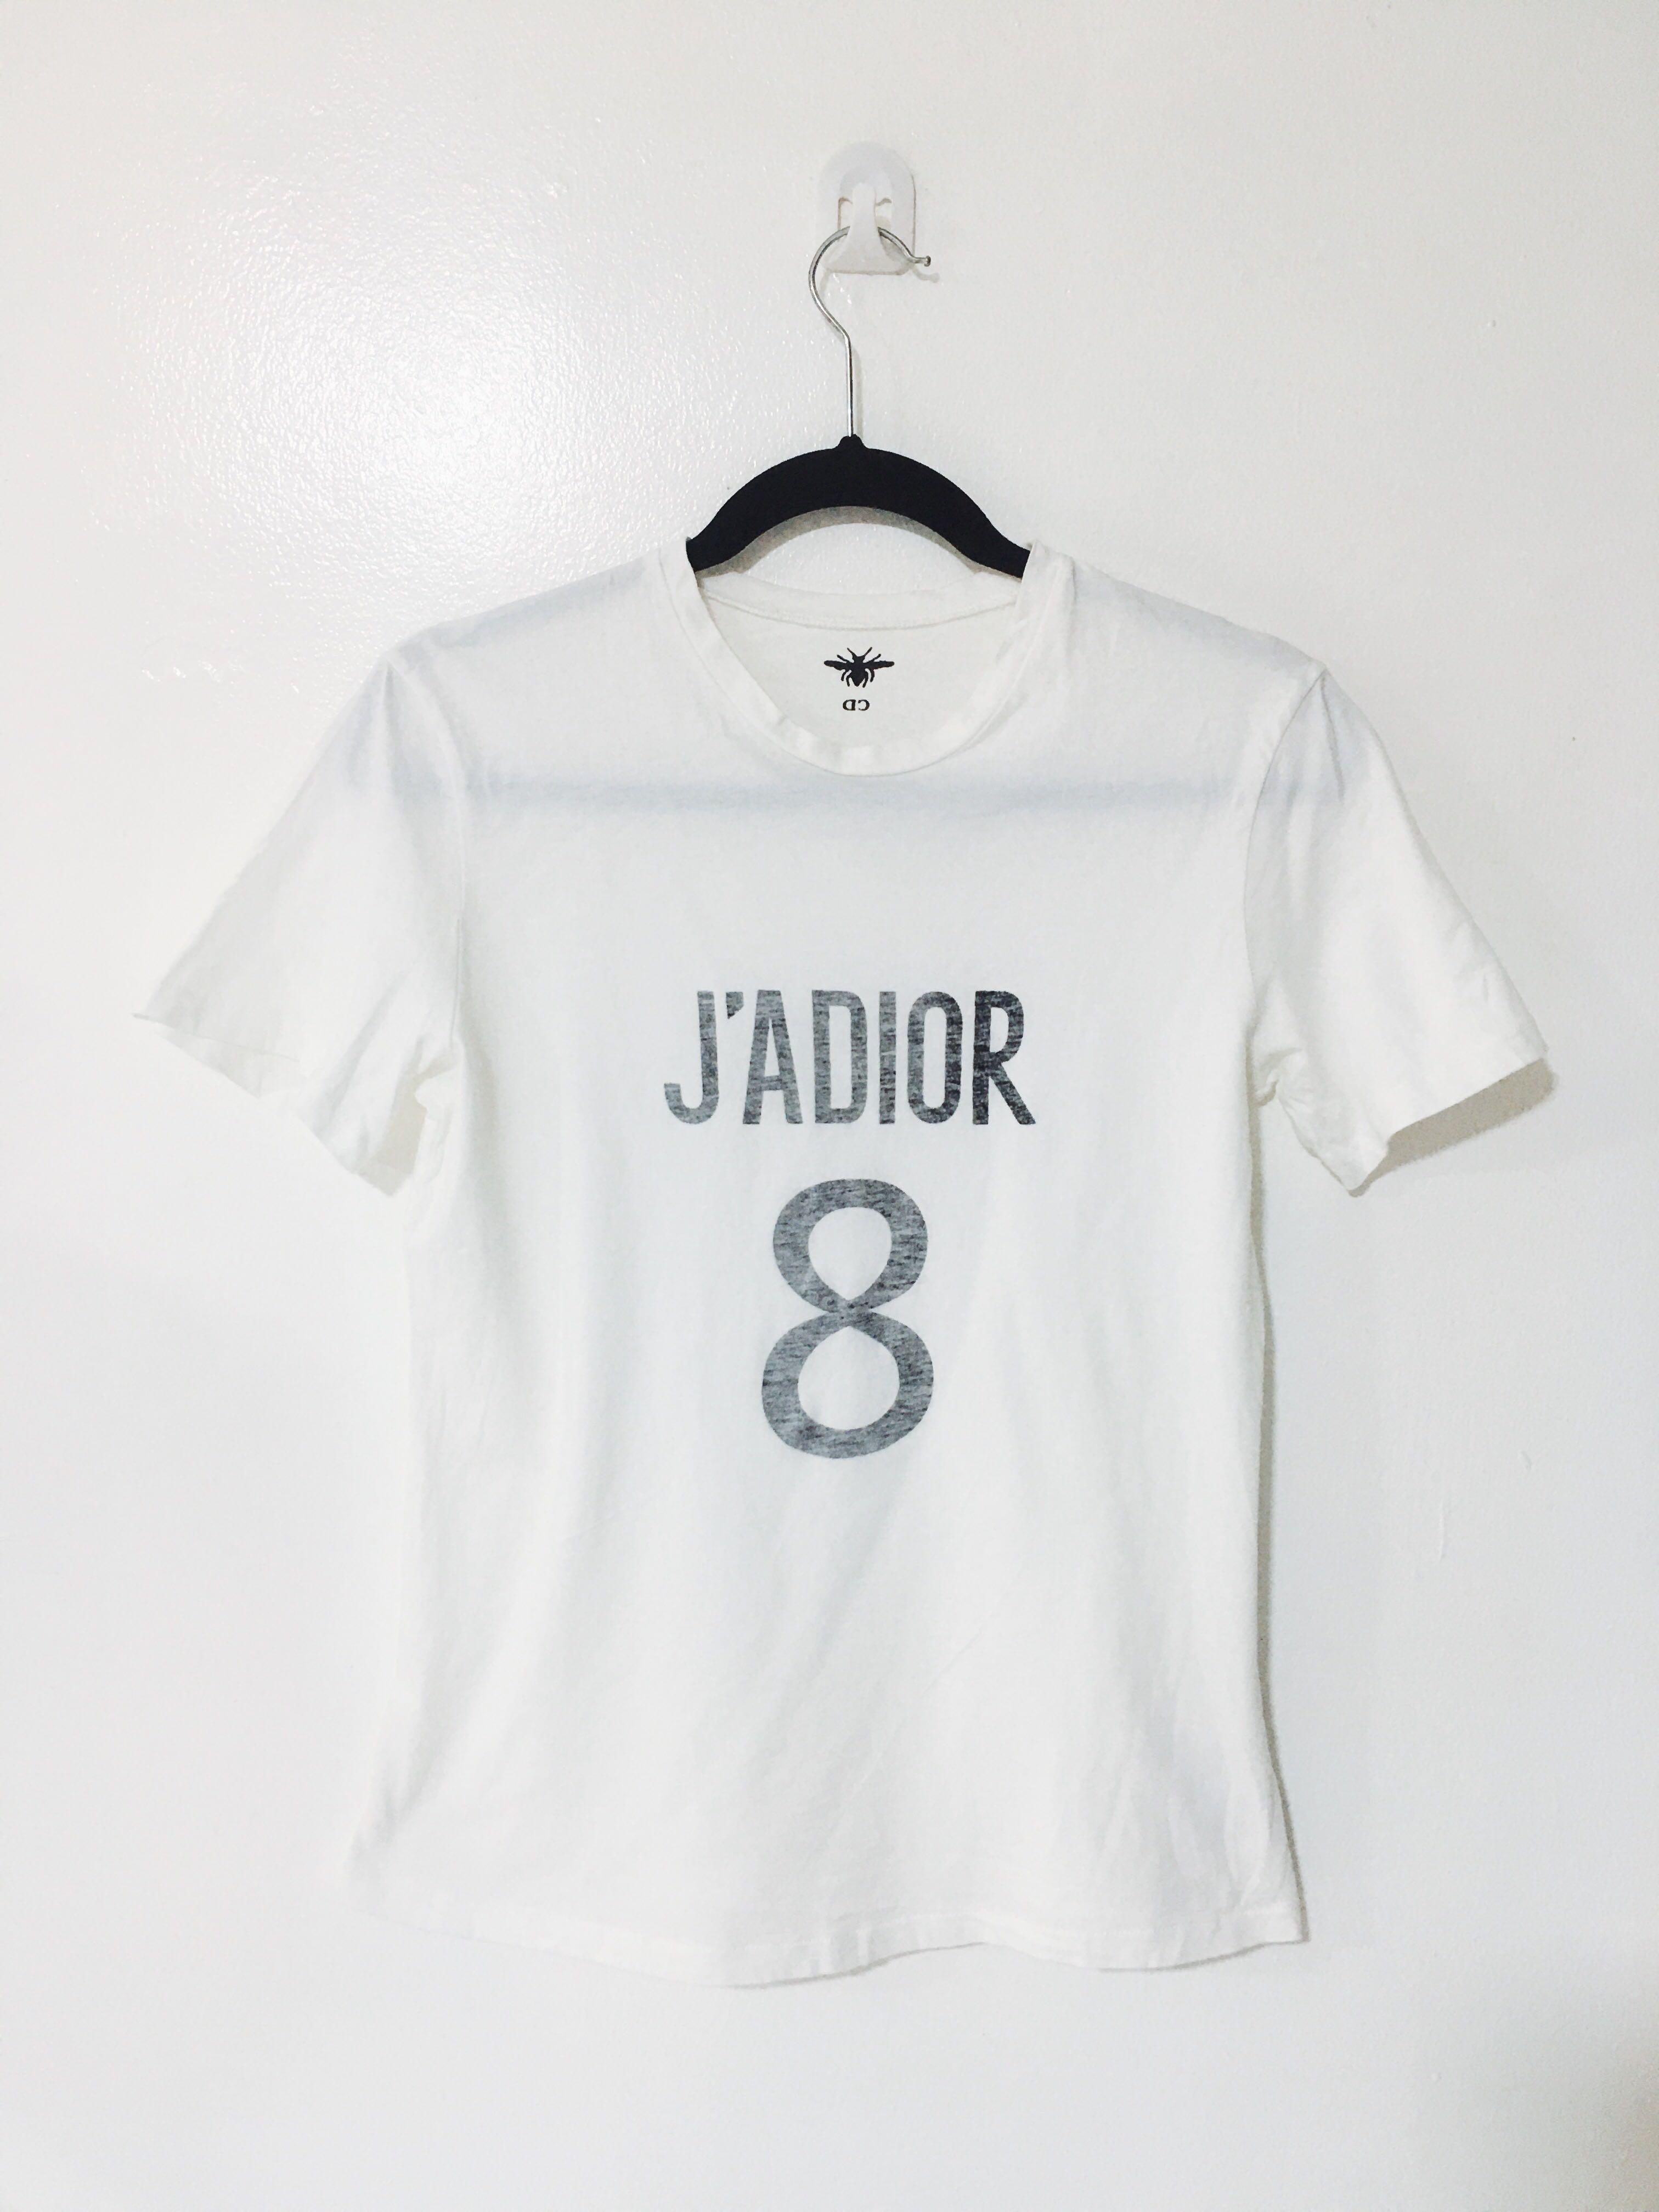 J'Adior 8 | Dior Shirt, Luxury, Apparel on Carousell